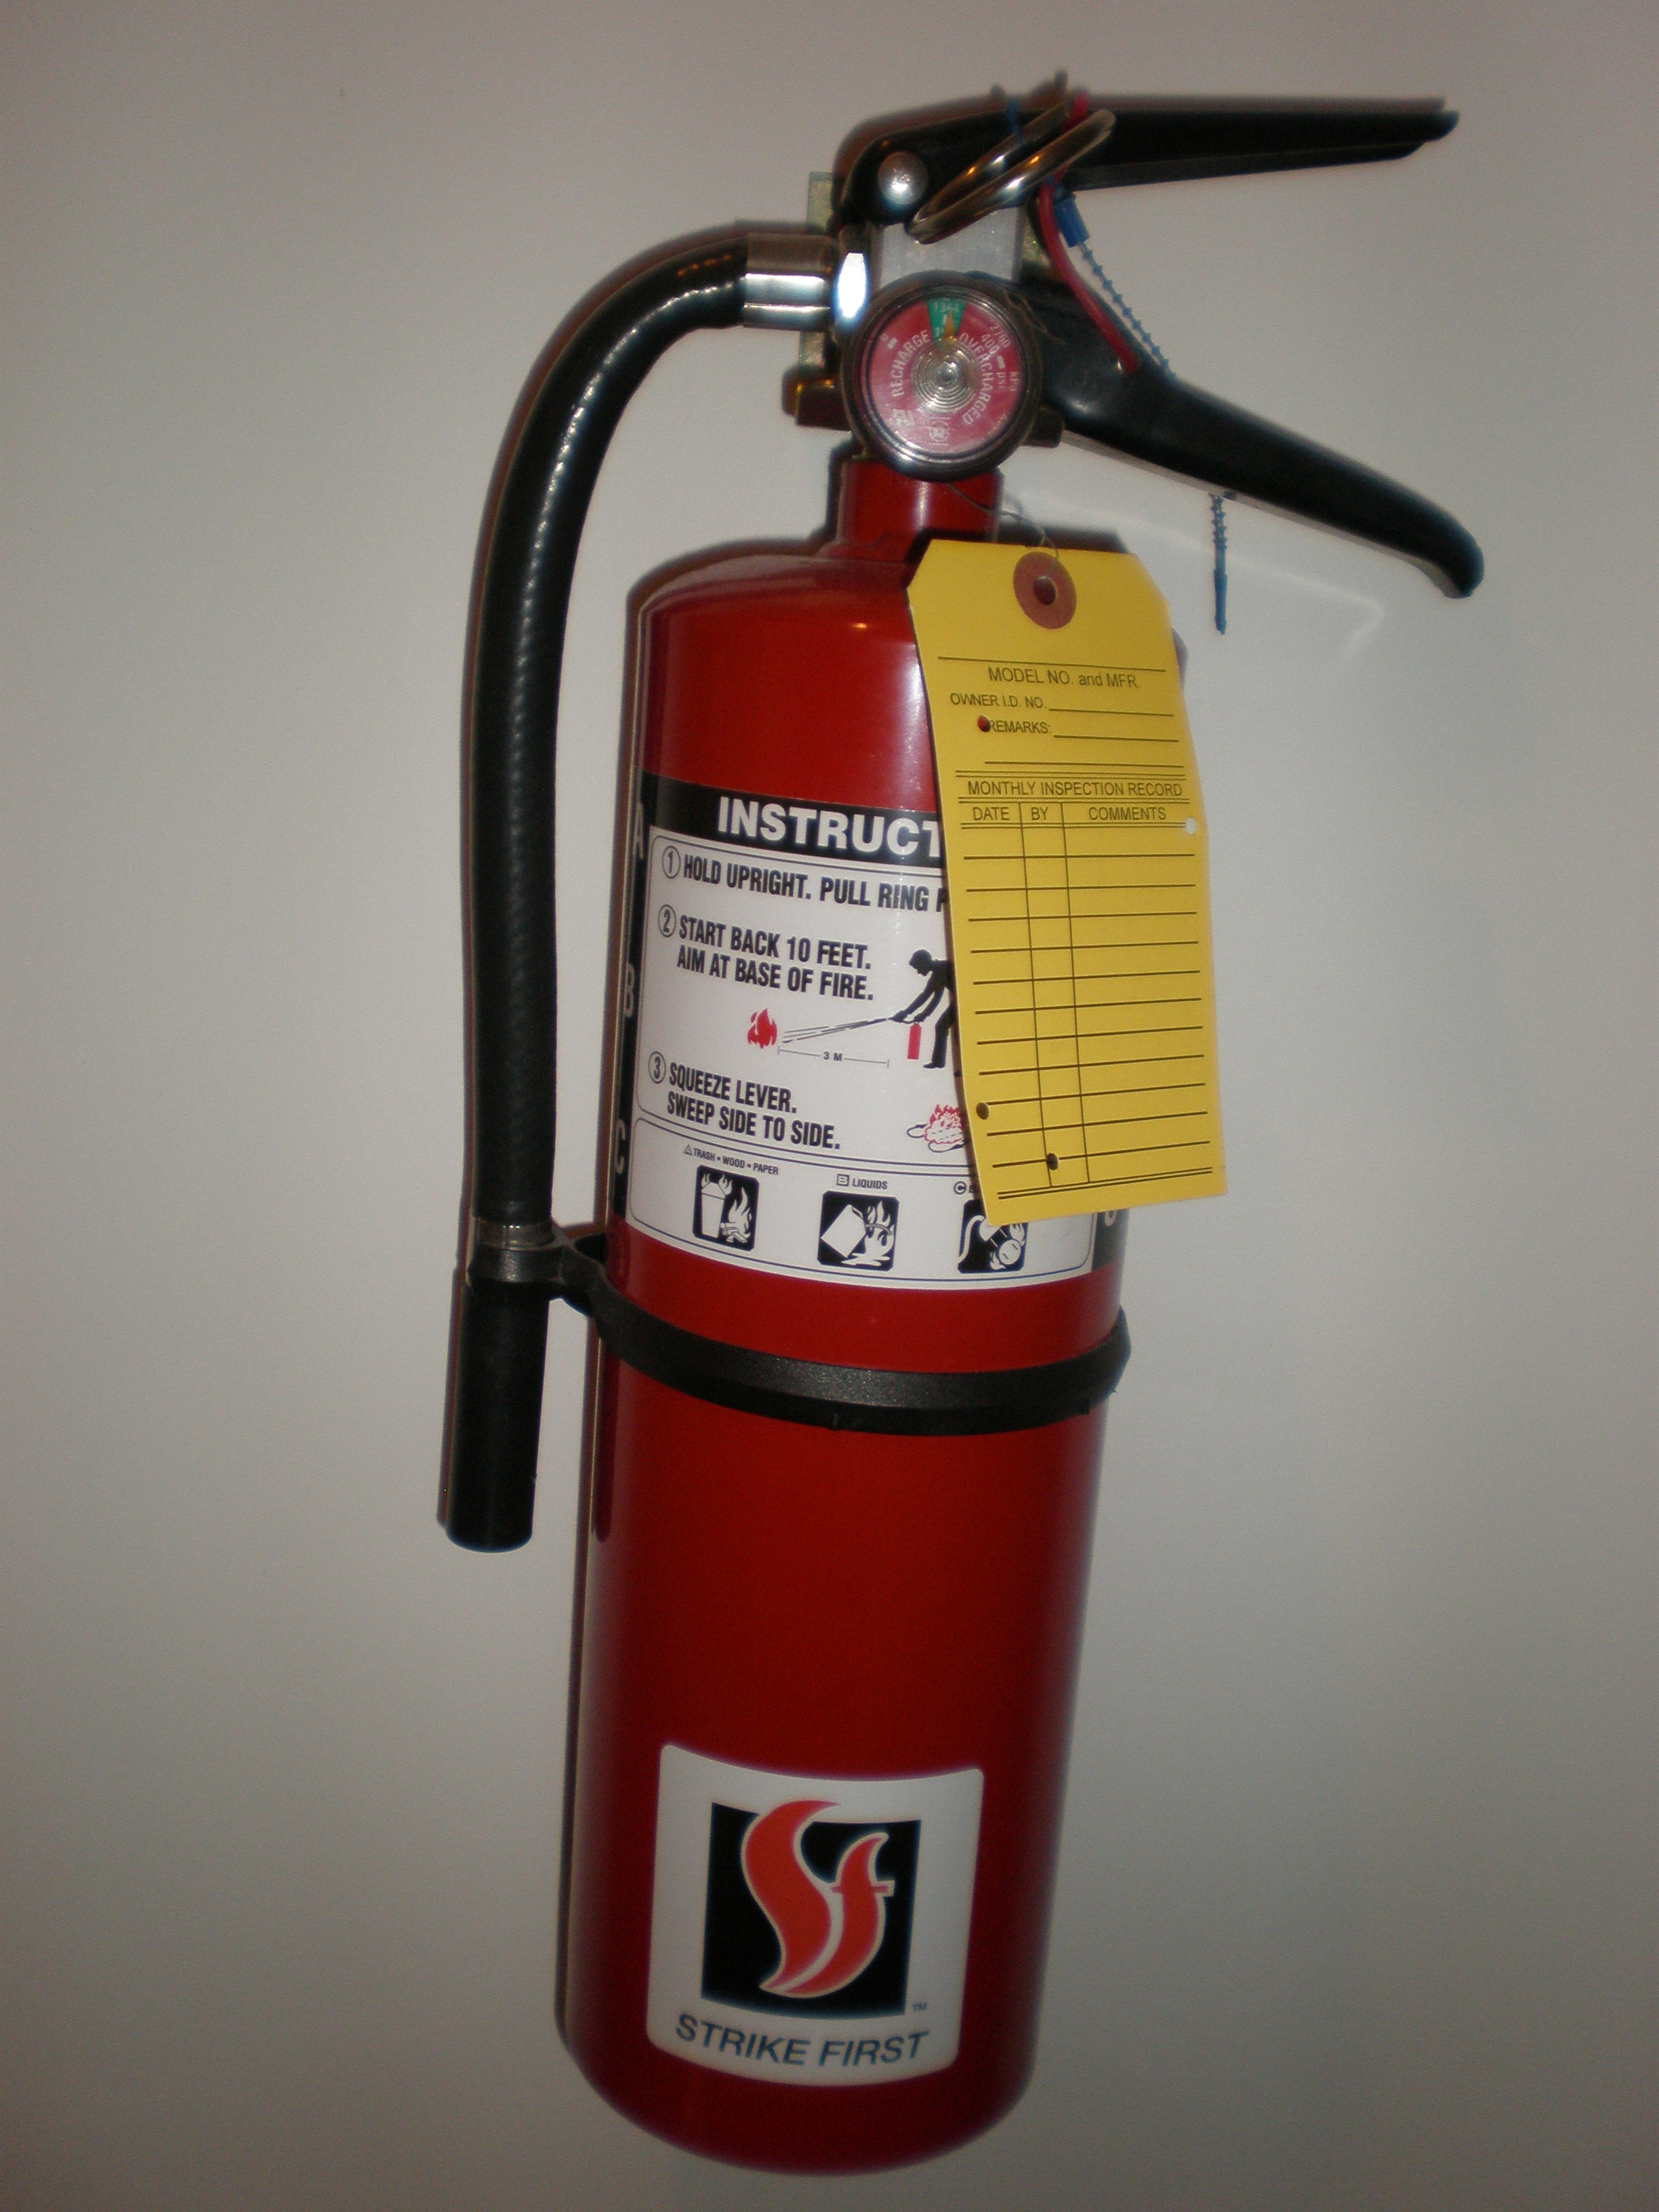 File:Strike First fire extinguisher.JPG - Wikimedia Commons